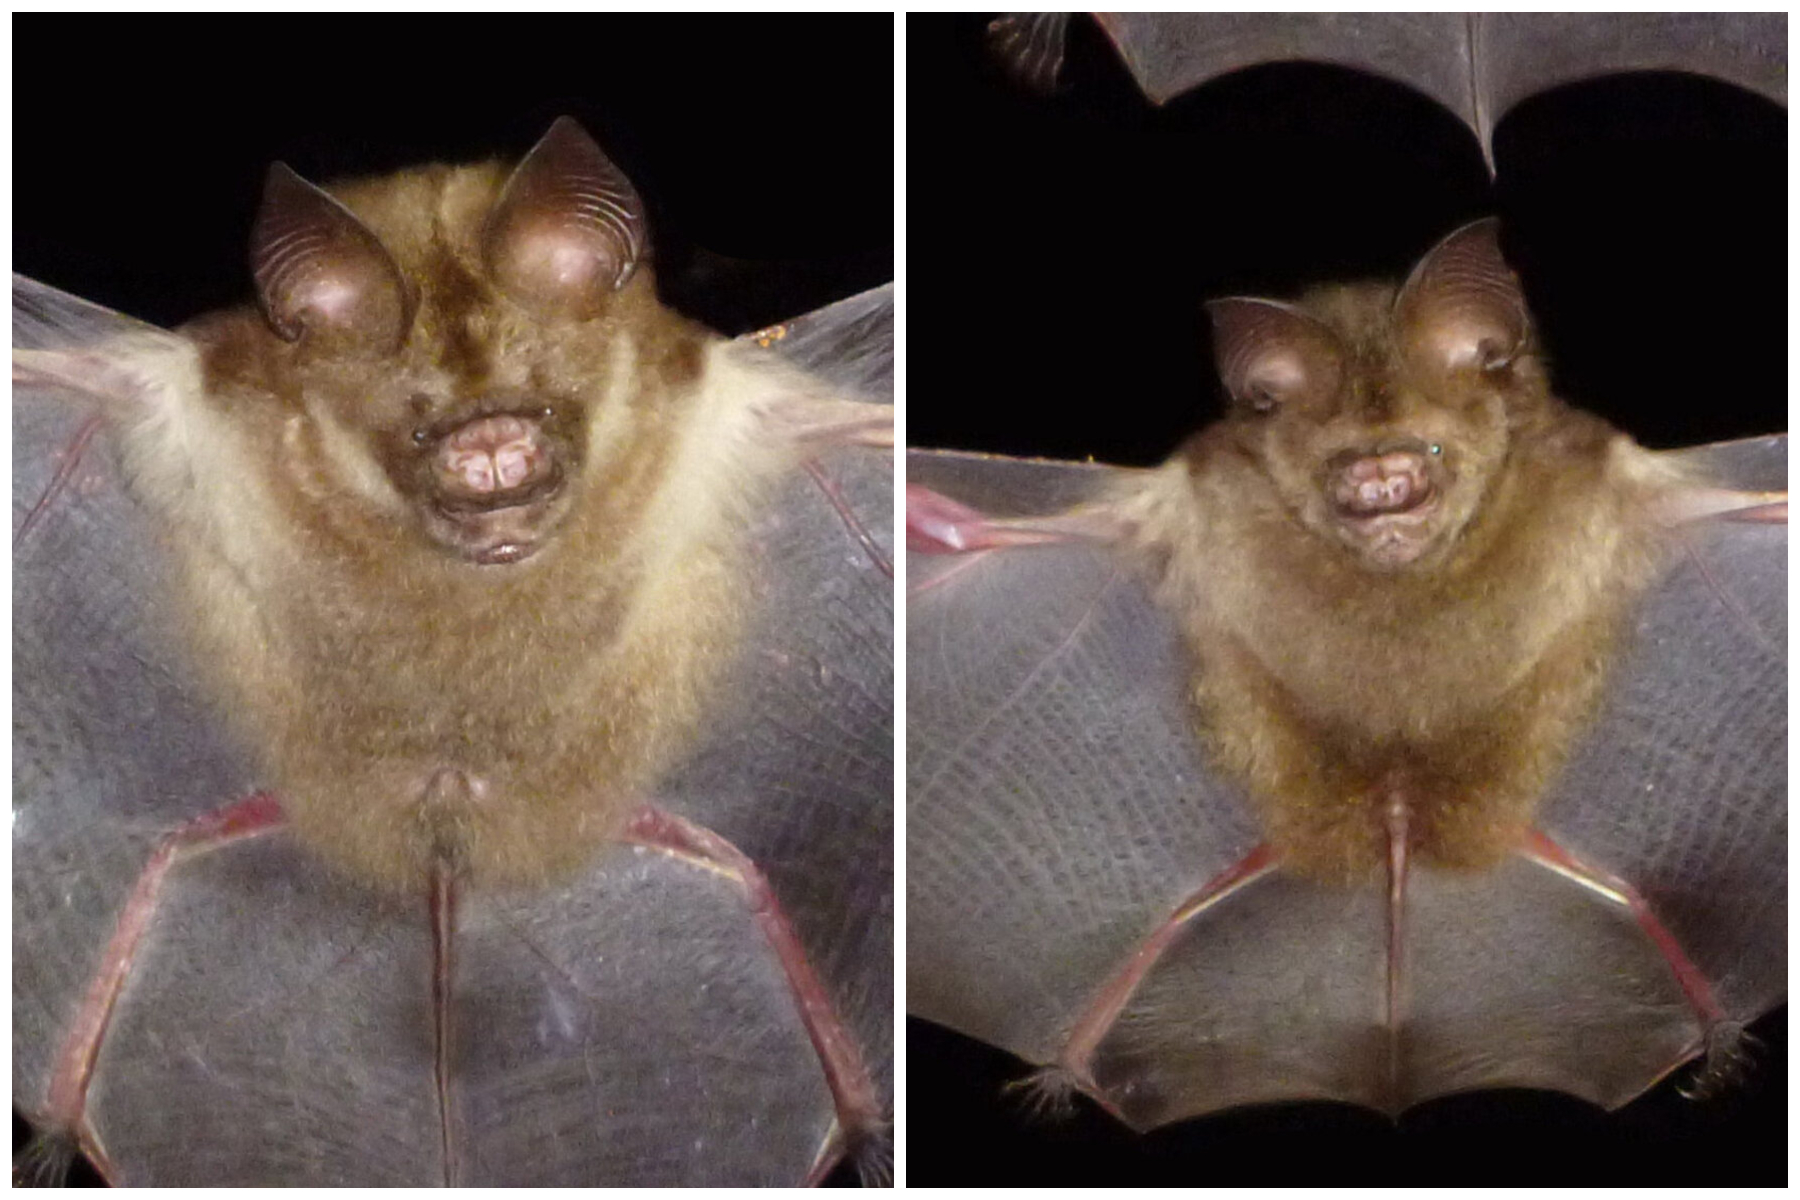 bats are going through a rare evolutionary phenomenon